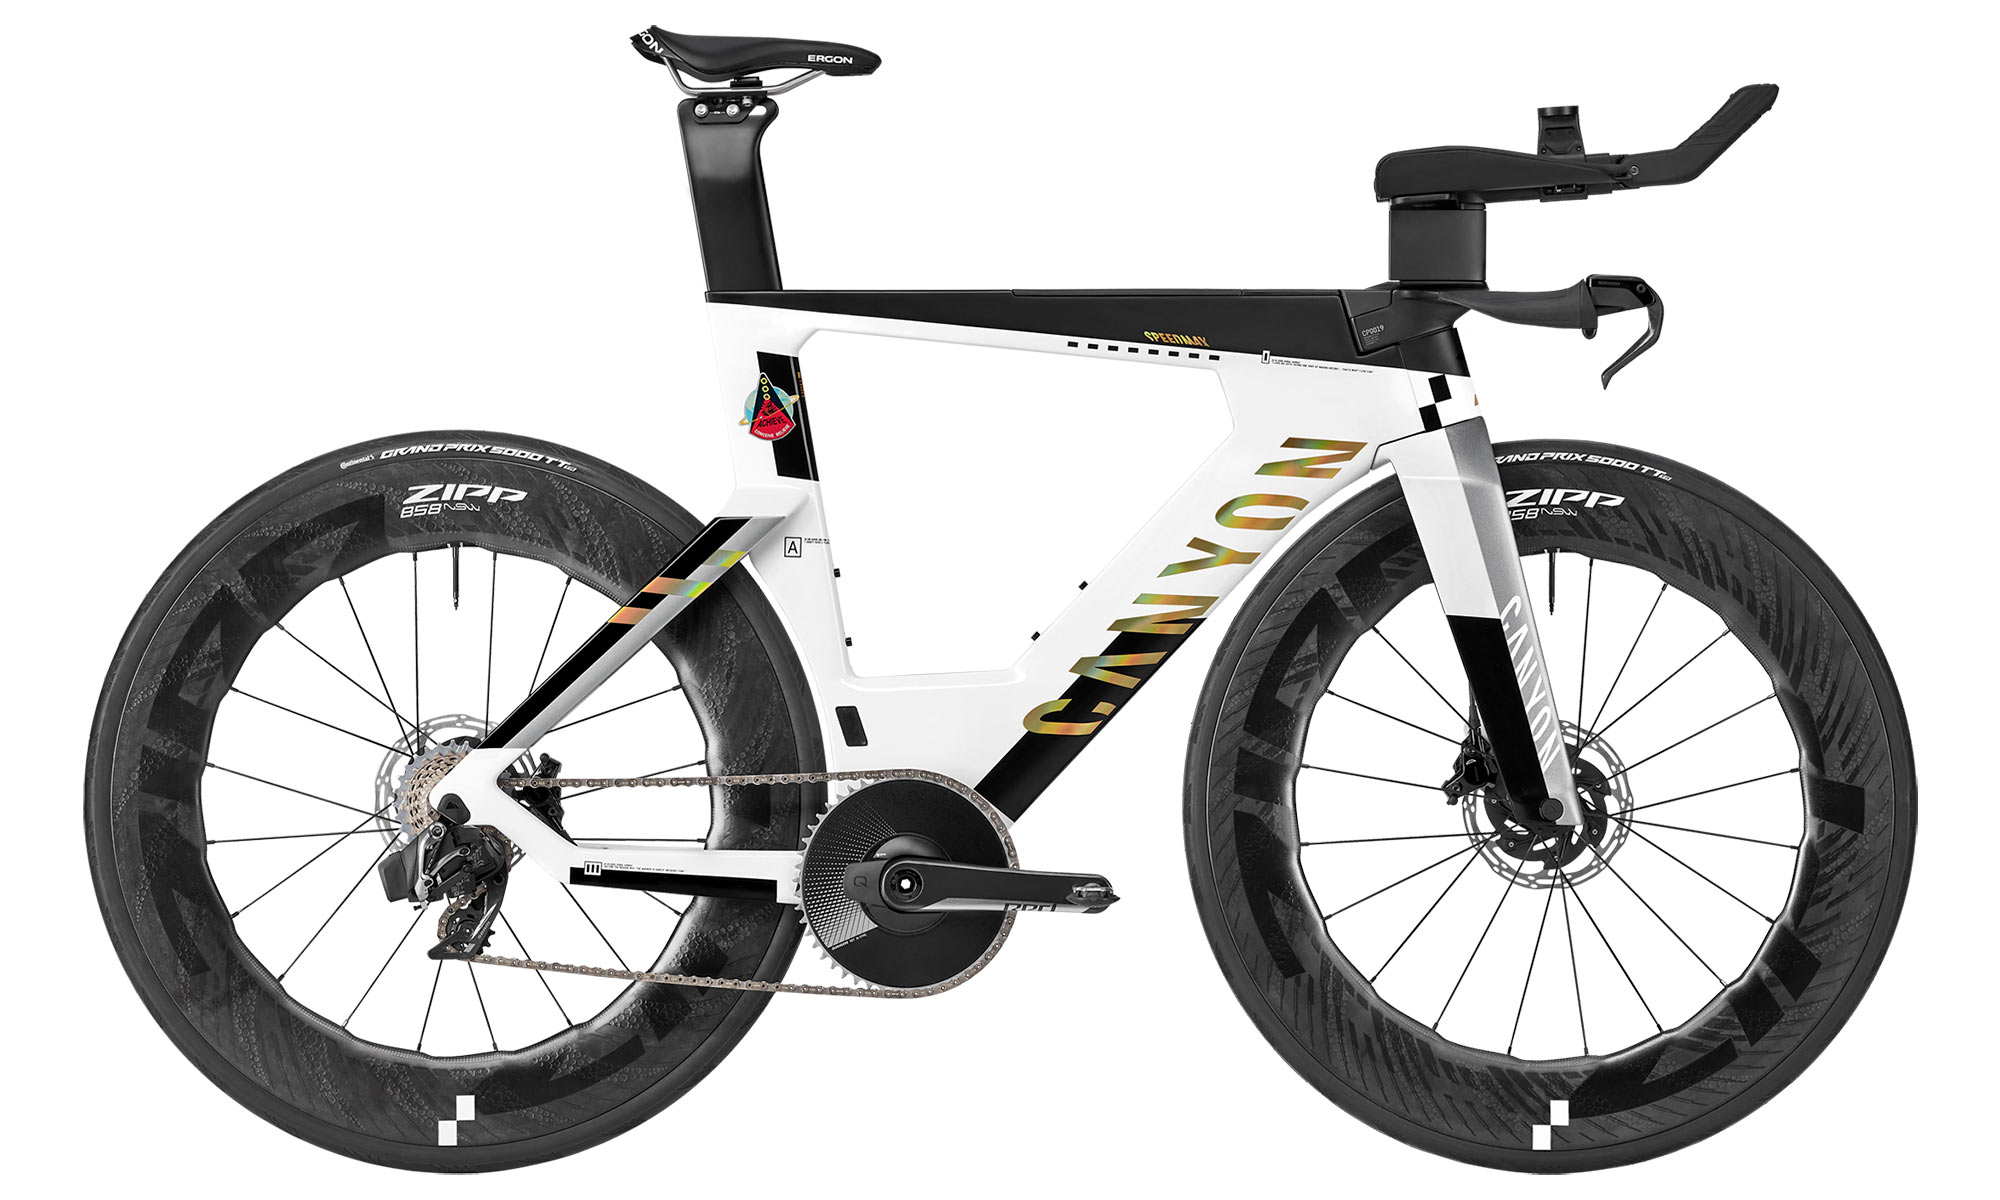 Canyon Speedmax CFR Moonshot LTD limited edition Jan Frodeno-signature triathlon bike, complete